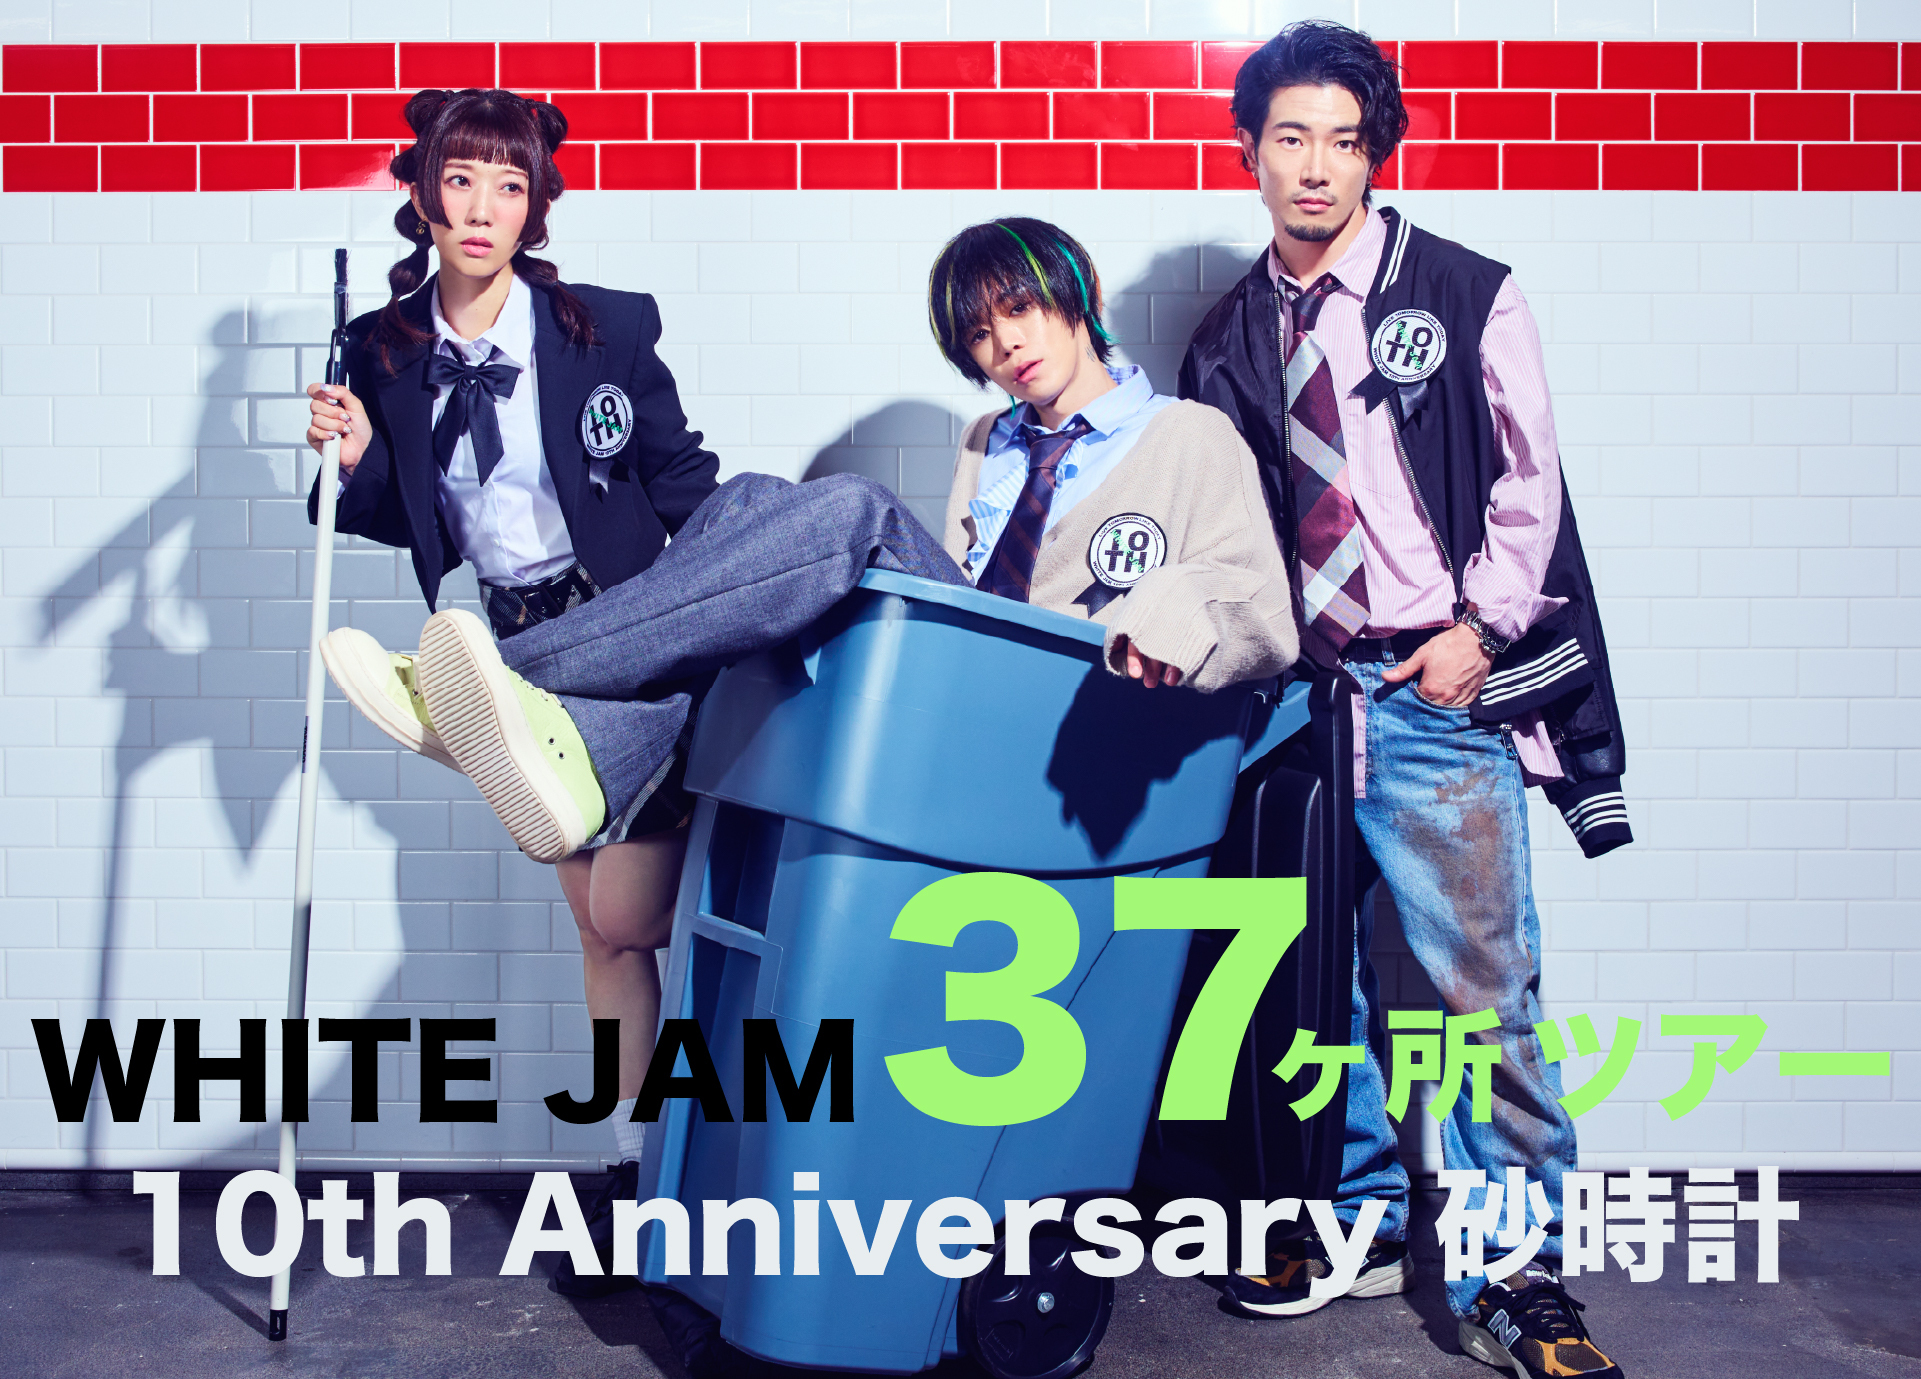 WHITE JAM 37ヶ所ツアー 〜10th Anniversary Live Tour〜 